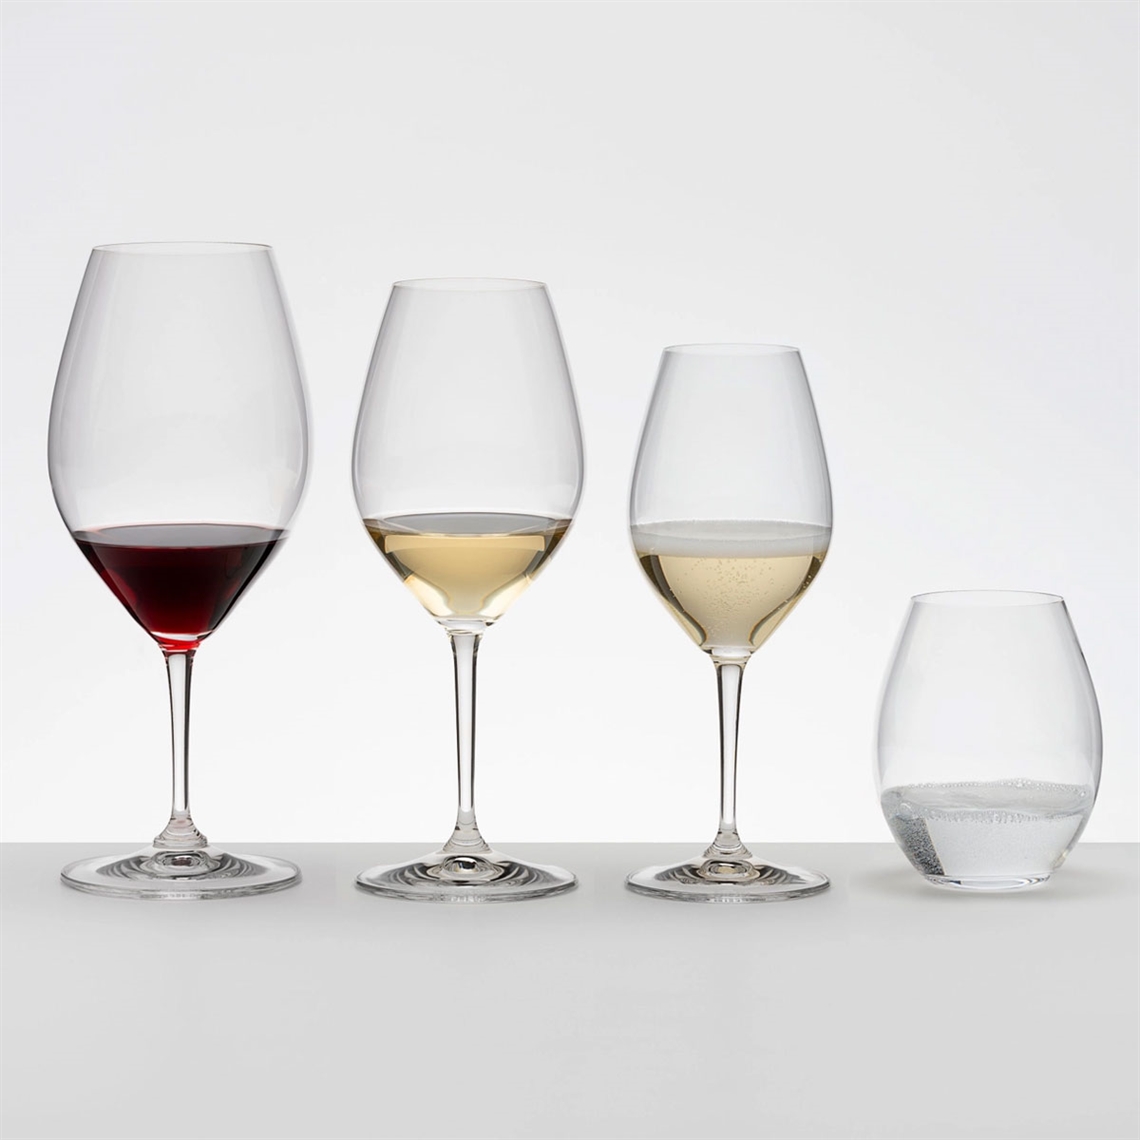 Riedel Wine Friendly Red Wine Glass 002 - Set of 4 - 6422/02